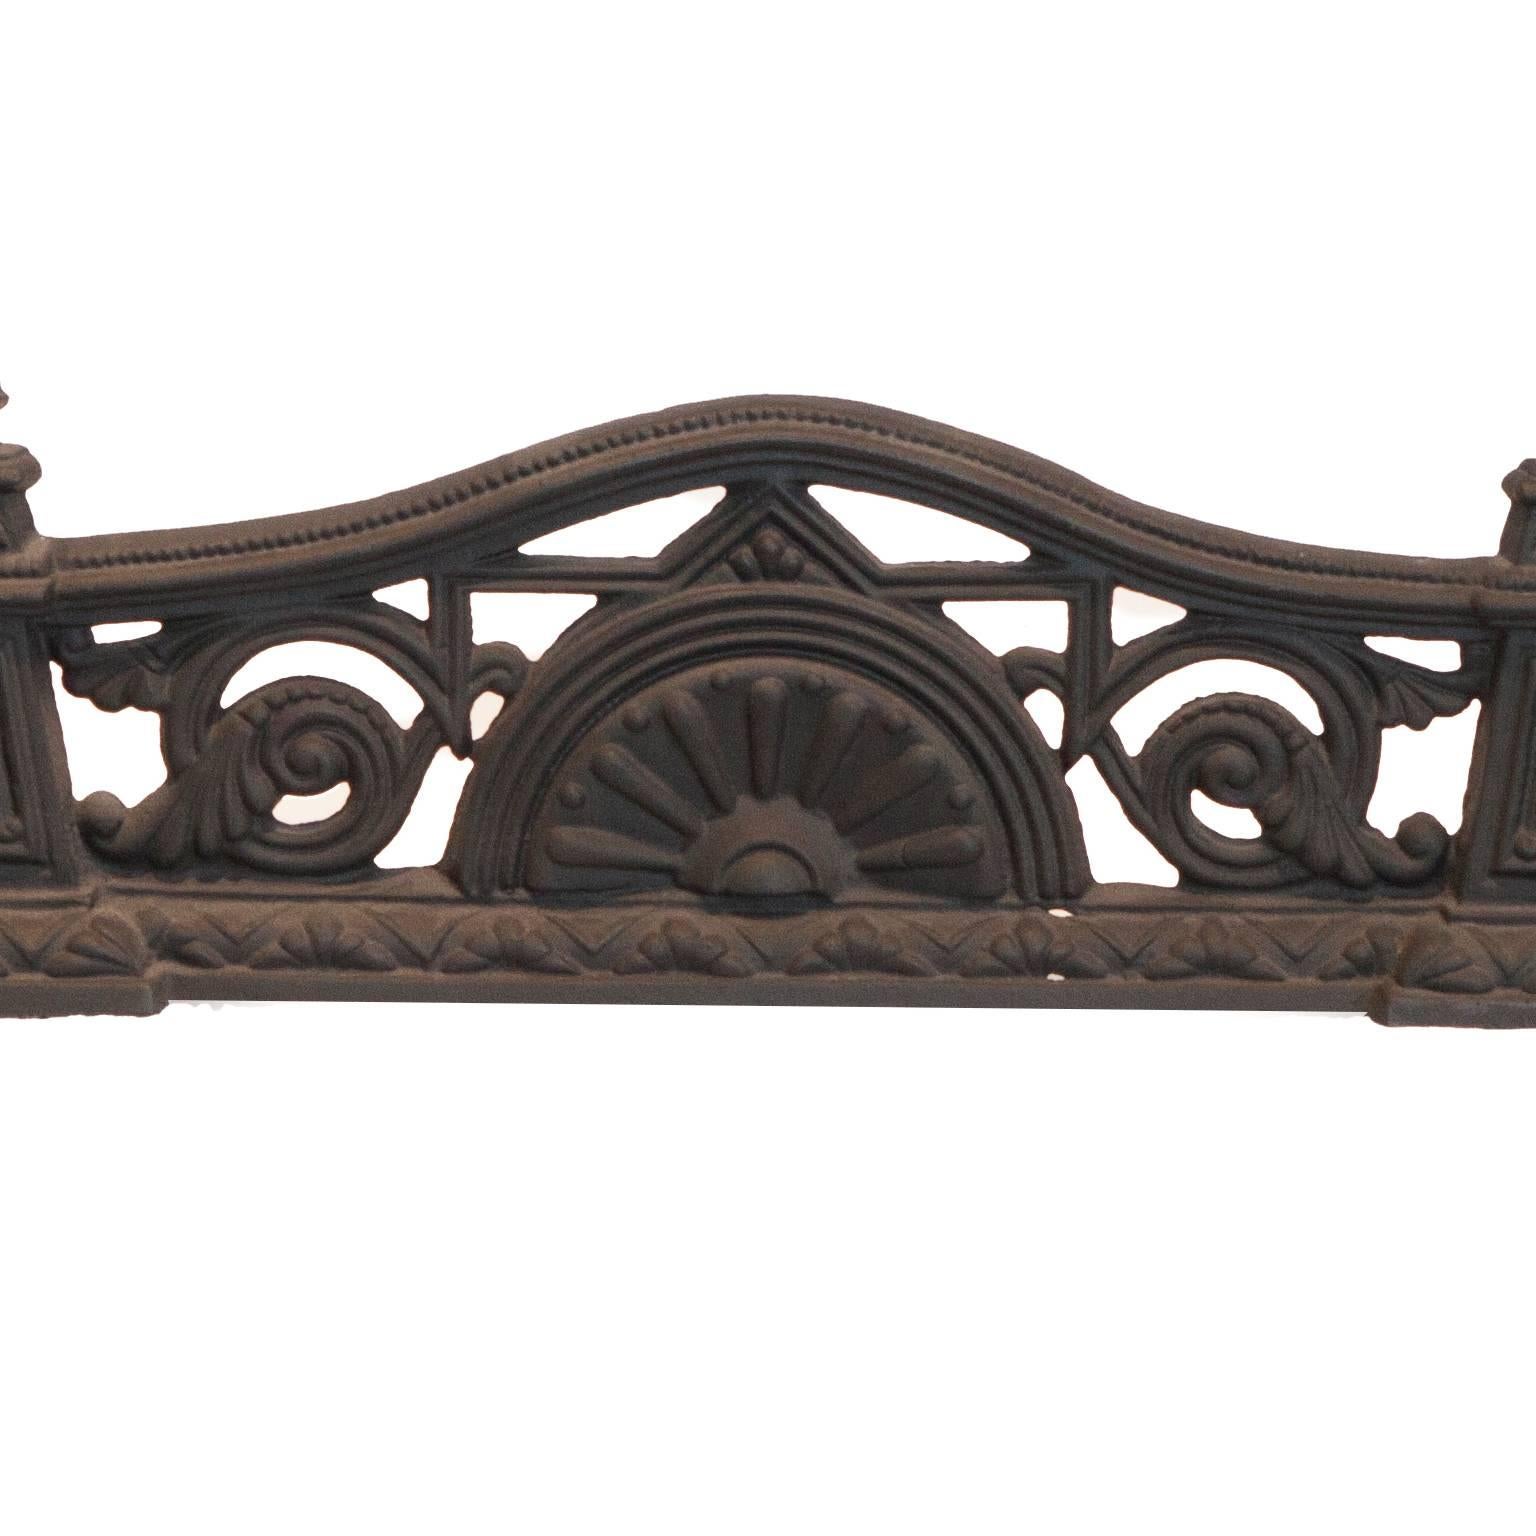 A small 19th century original Victorian cast iron black fender.

Outside dimensions: 
41